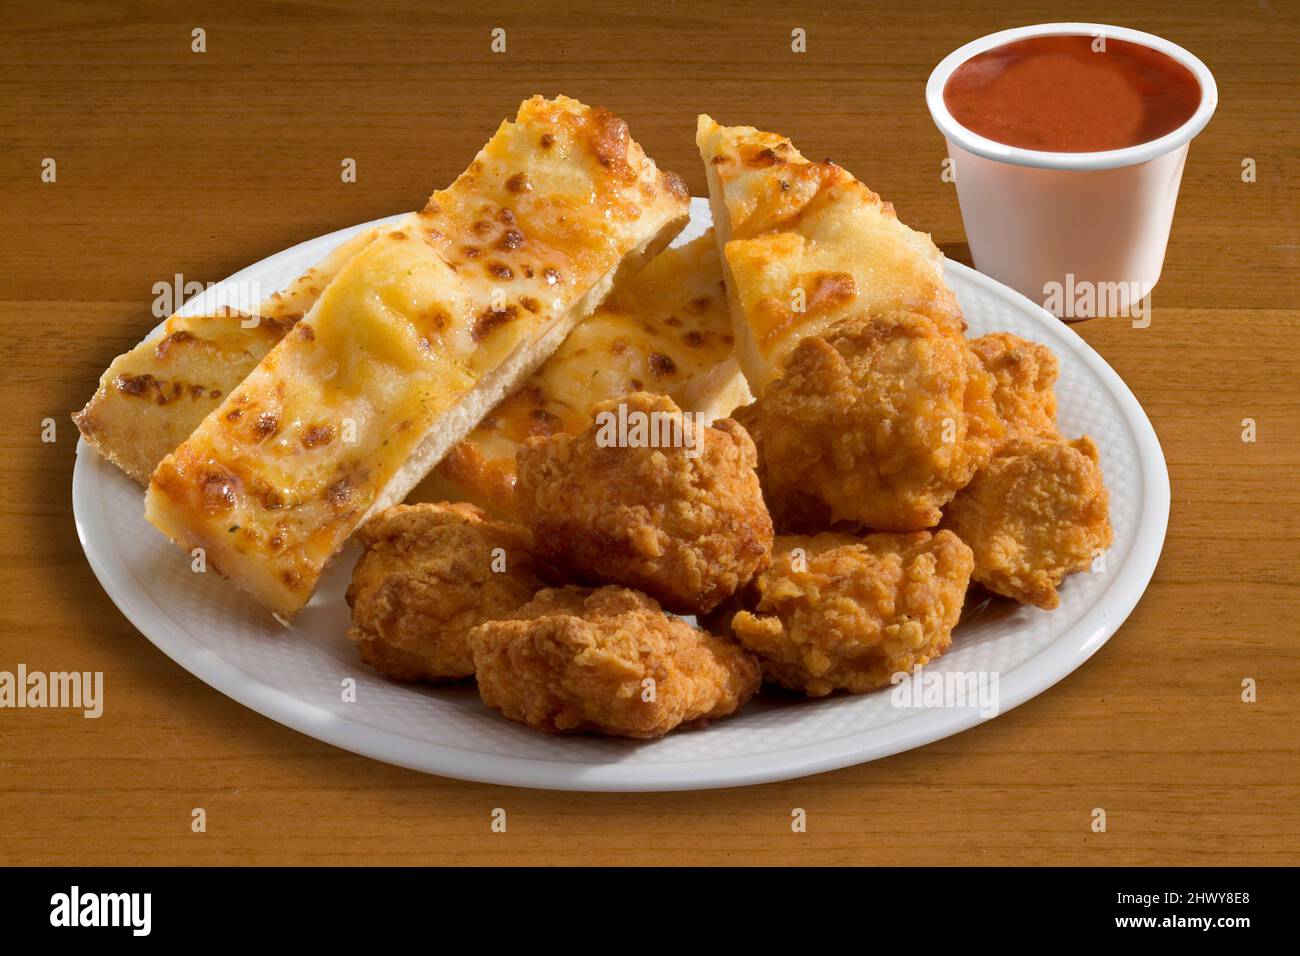 Cheesy Bread and Chicken Bites Stock Photo